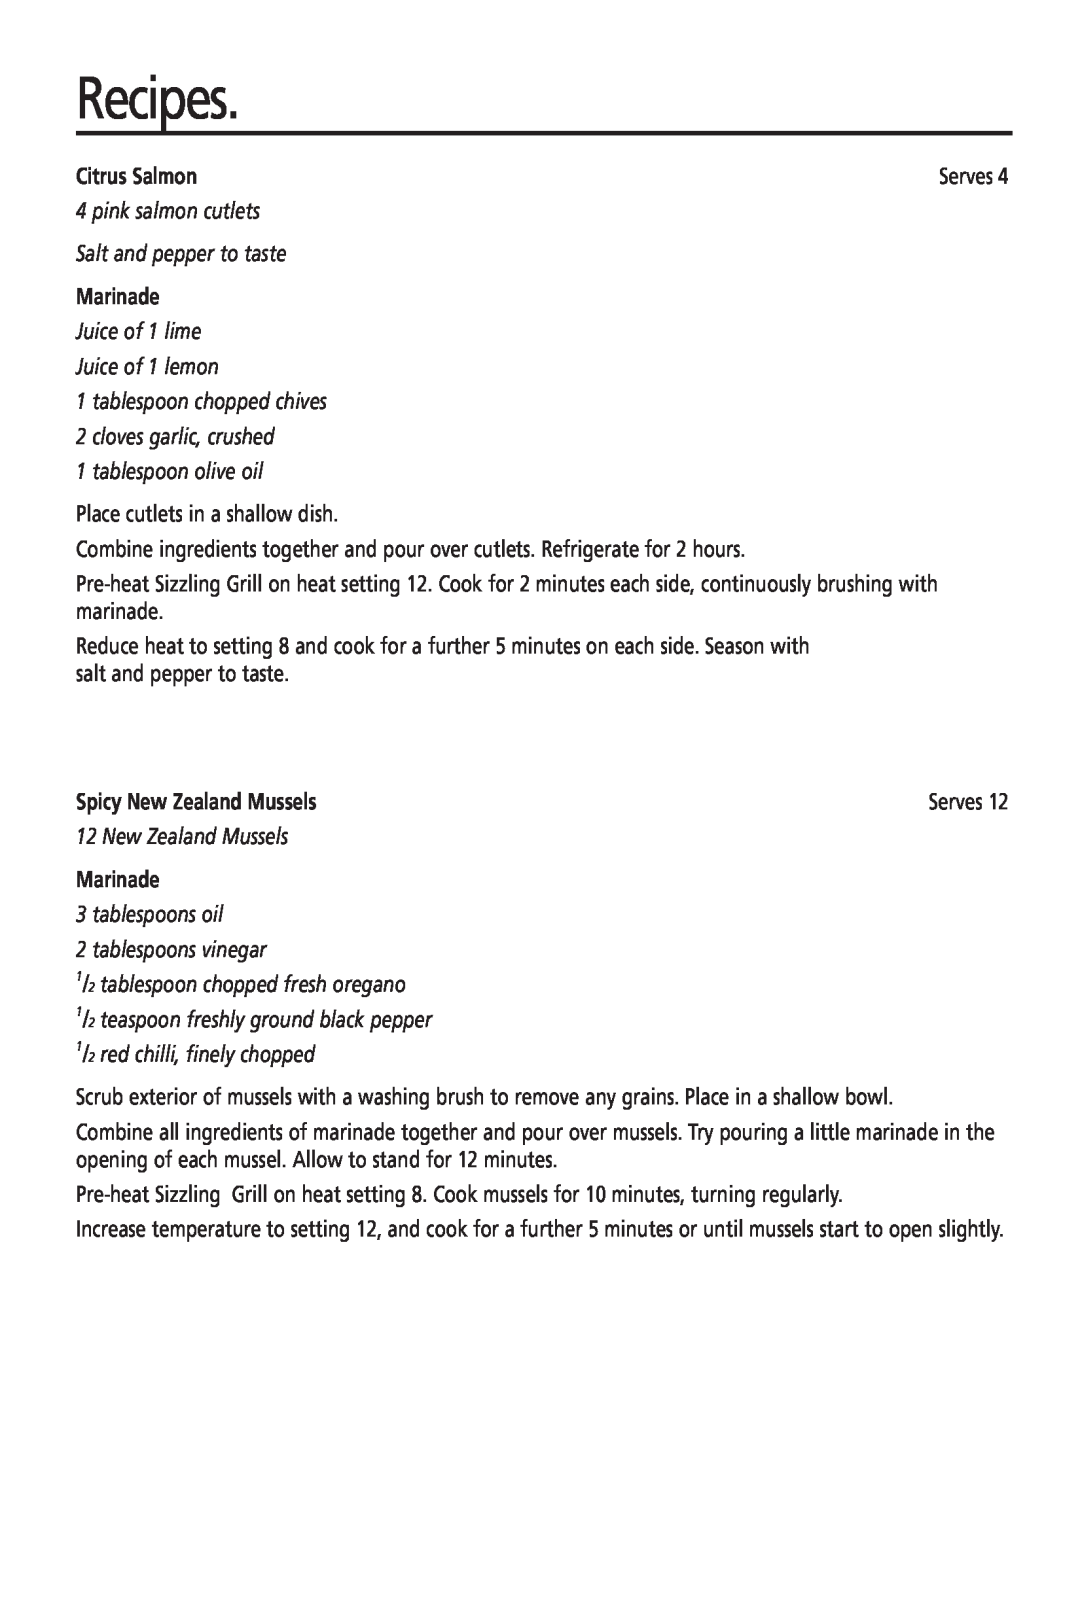 Sunbeam HG2300 manual Recipes, Citrus Salmon, Marinade, Spicy New Zealand Mussels 